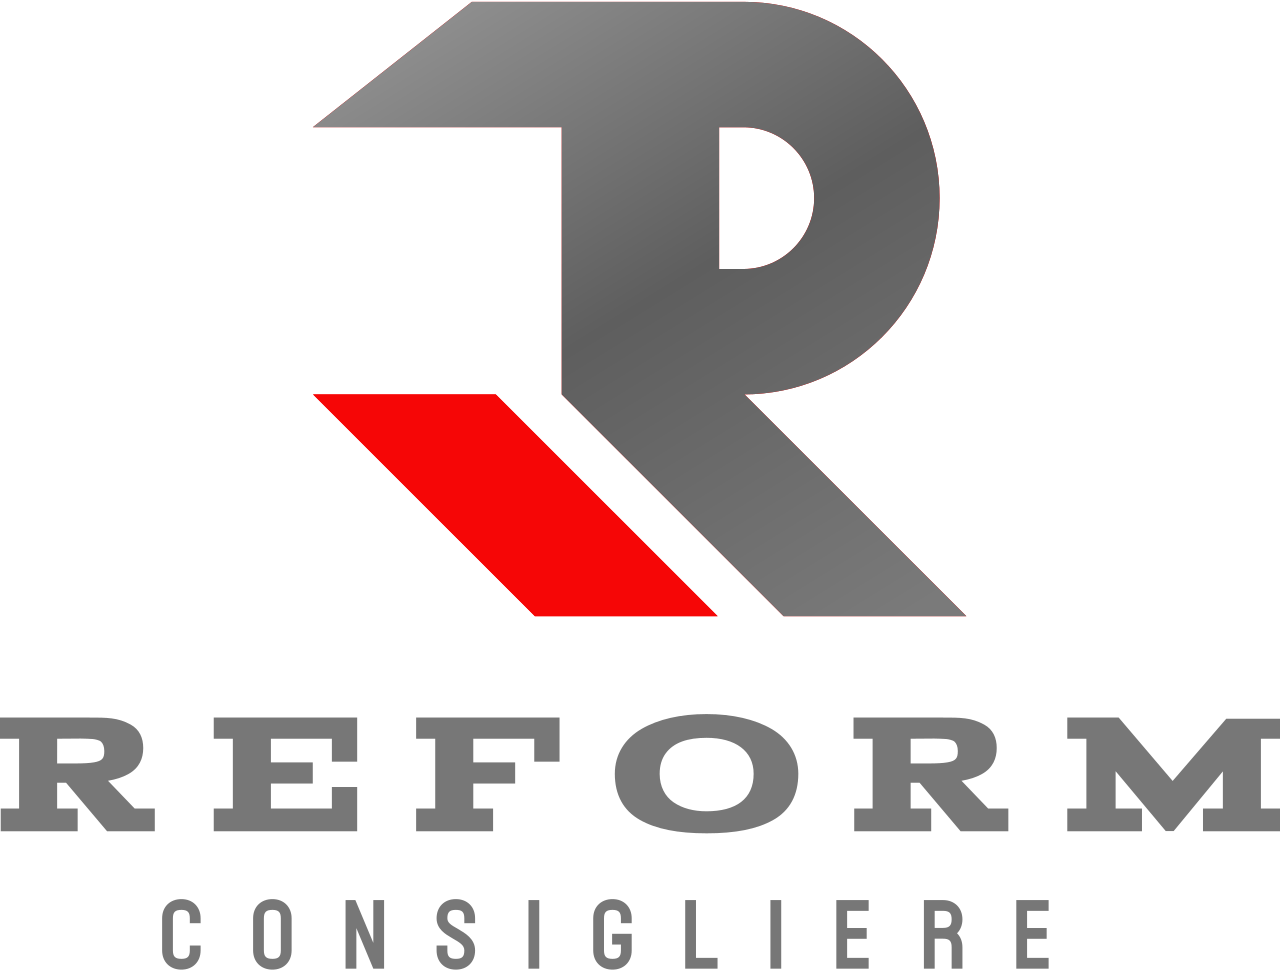 REFORM's logo